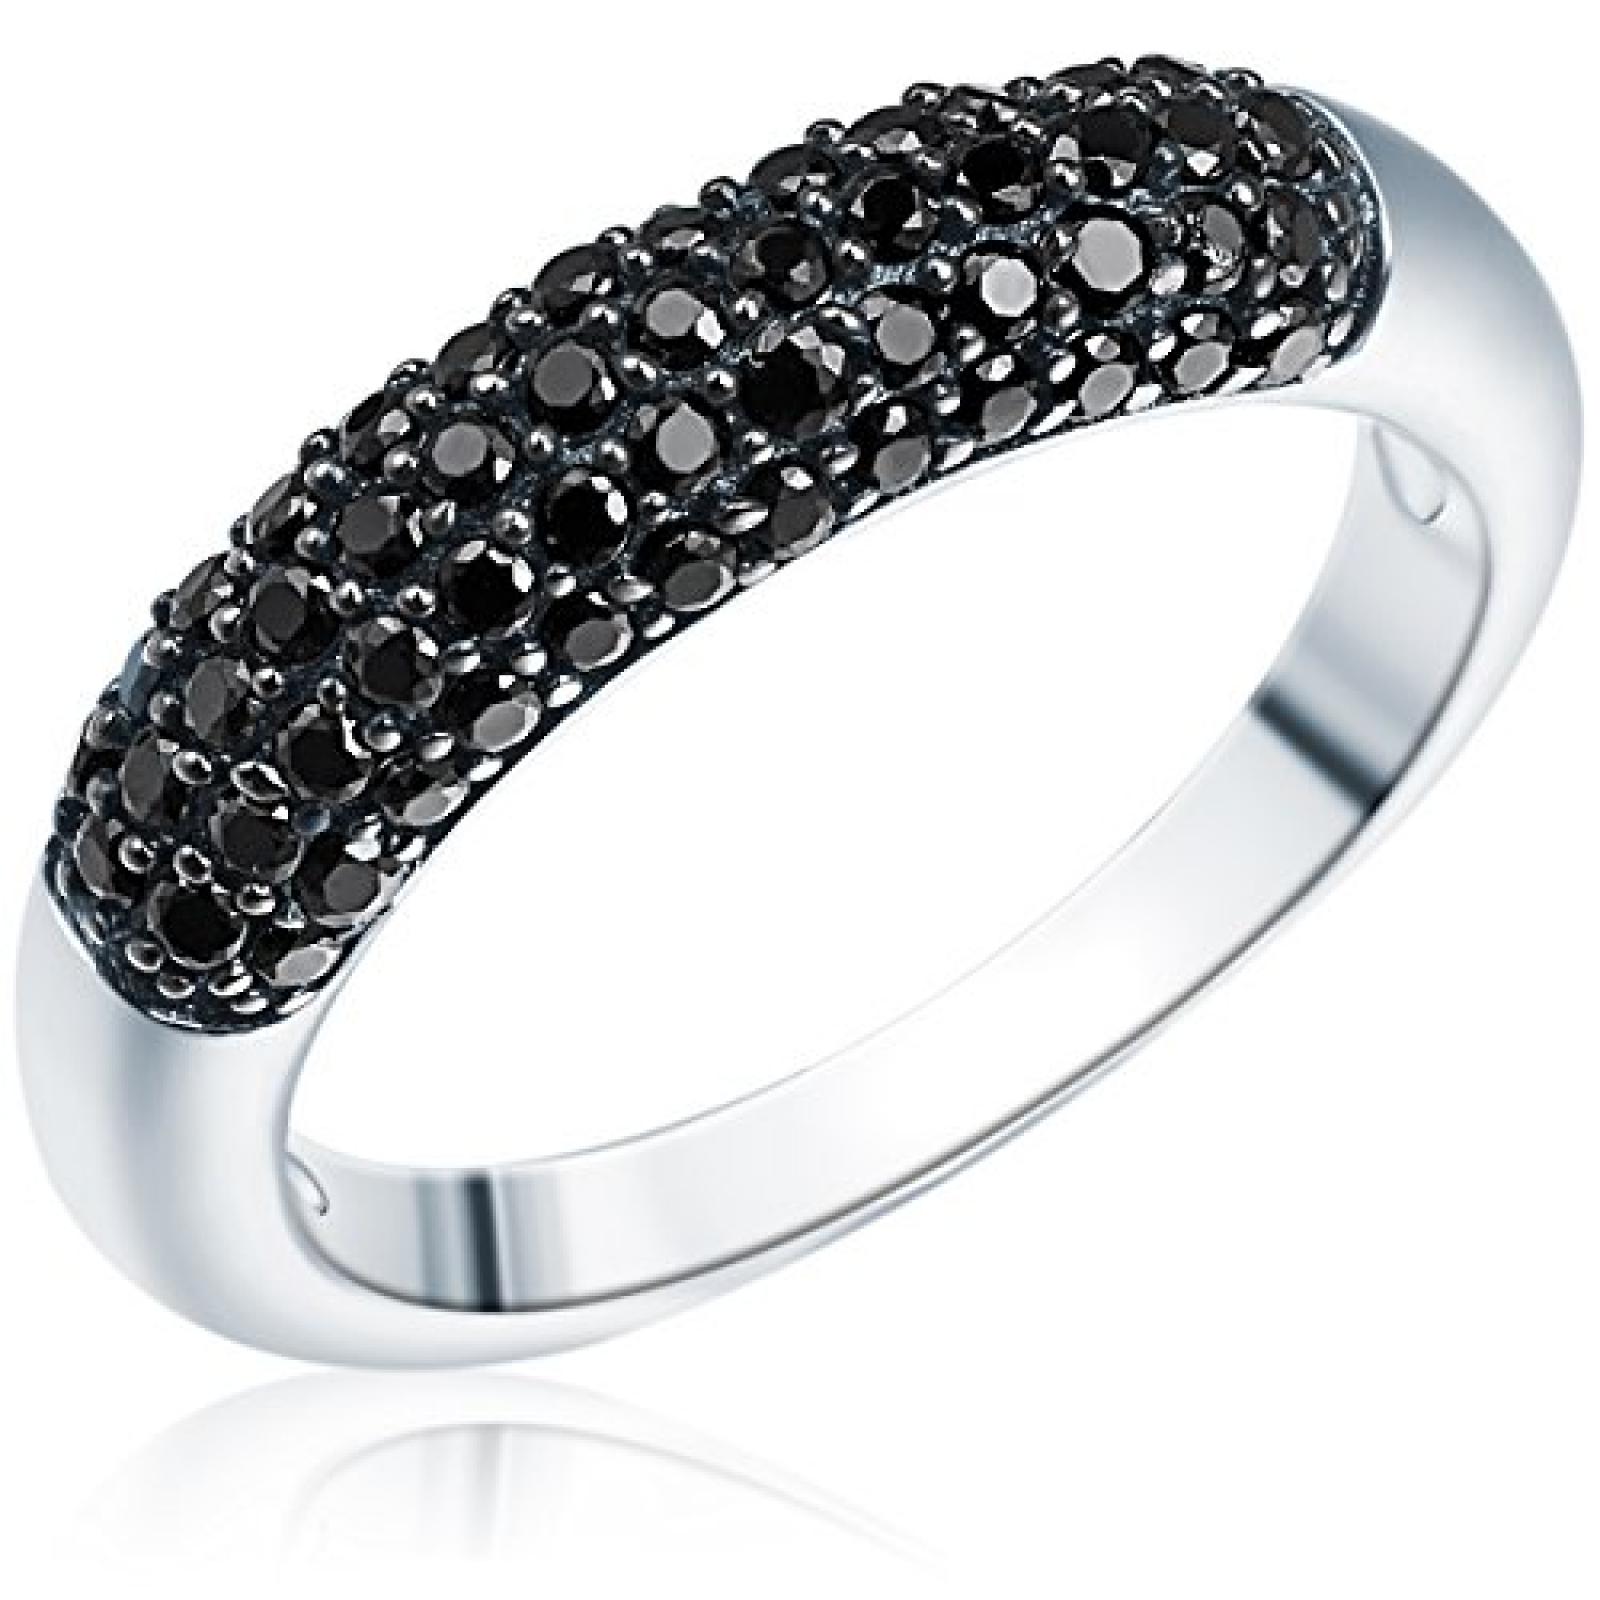 RAFAELA DONATA 925/- Sterling Silber rhodiniert Ring mit Zirkonia schwarz 